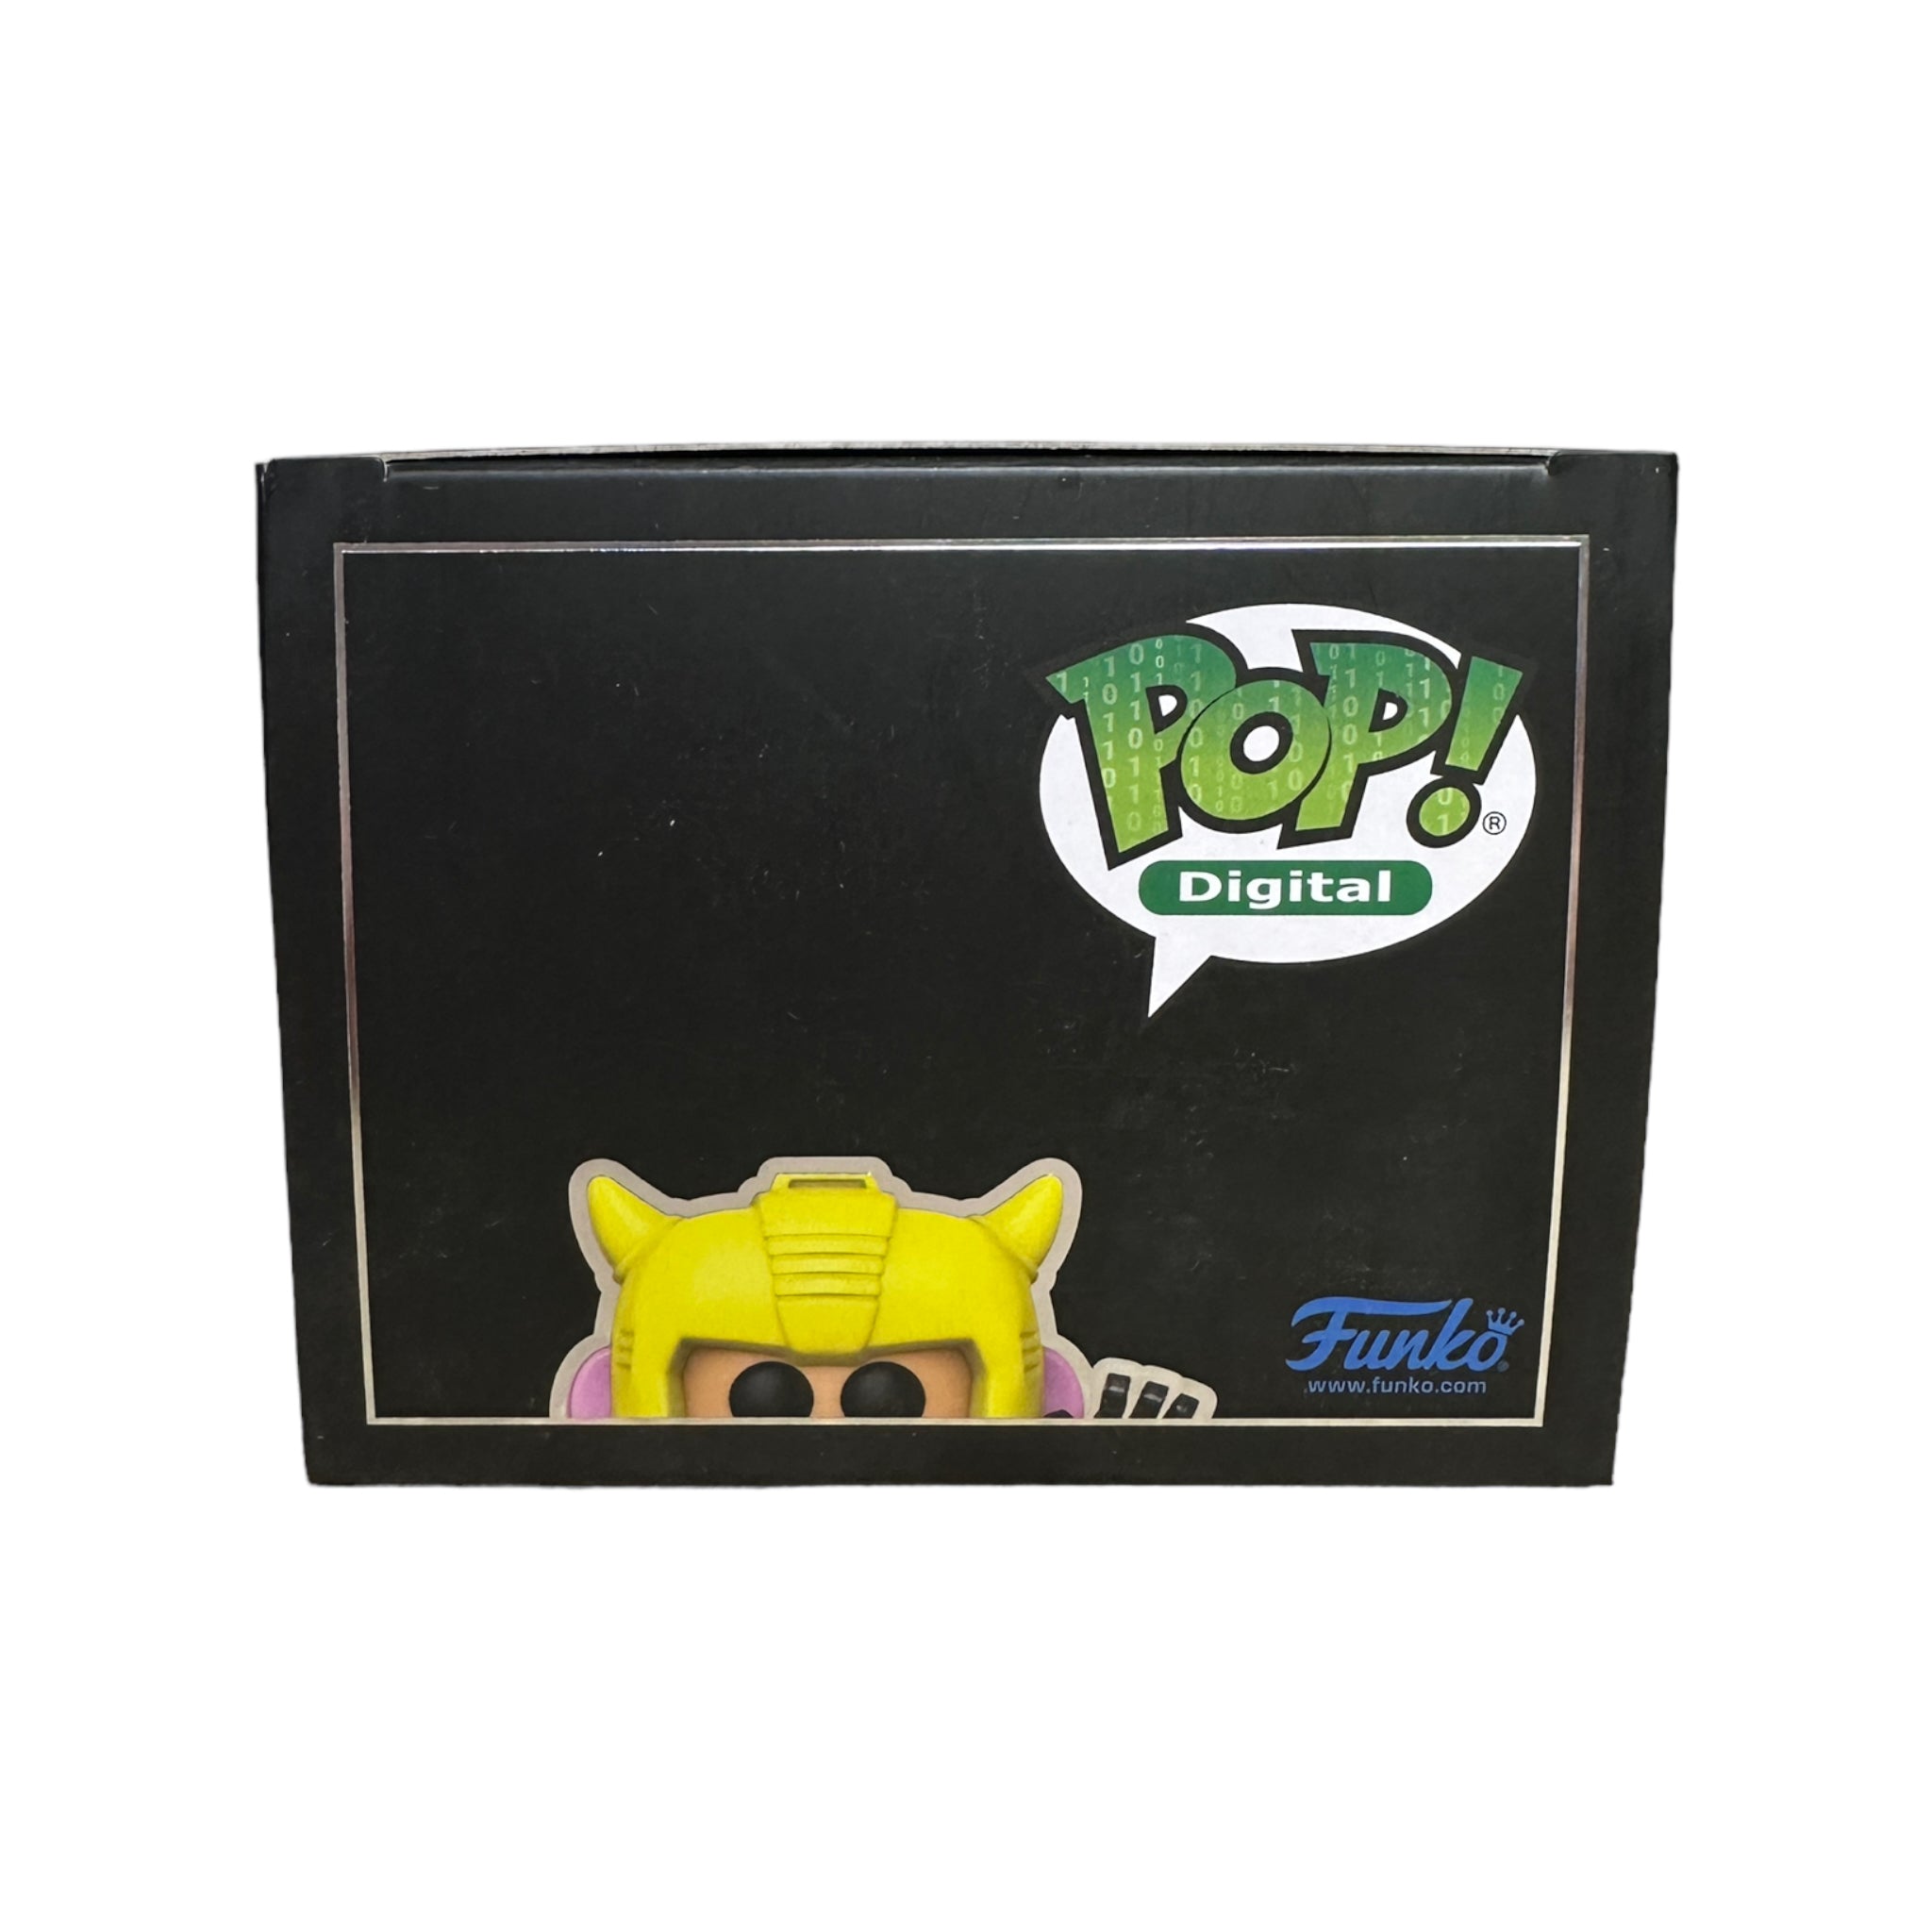 Mr. Potato Head Bumblebee #125 Funko Pop! - Retro Toys - NFT Release Exclusive LE1550 Pcs - Condition 8.75/10